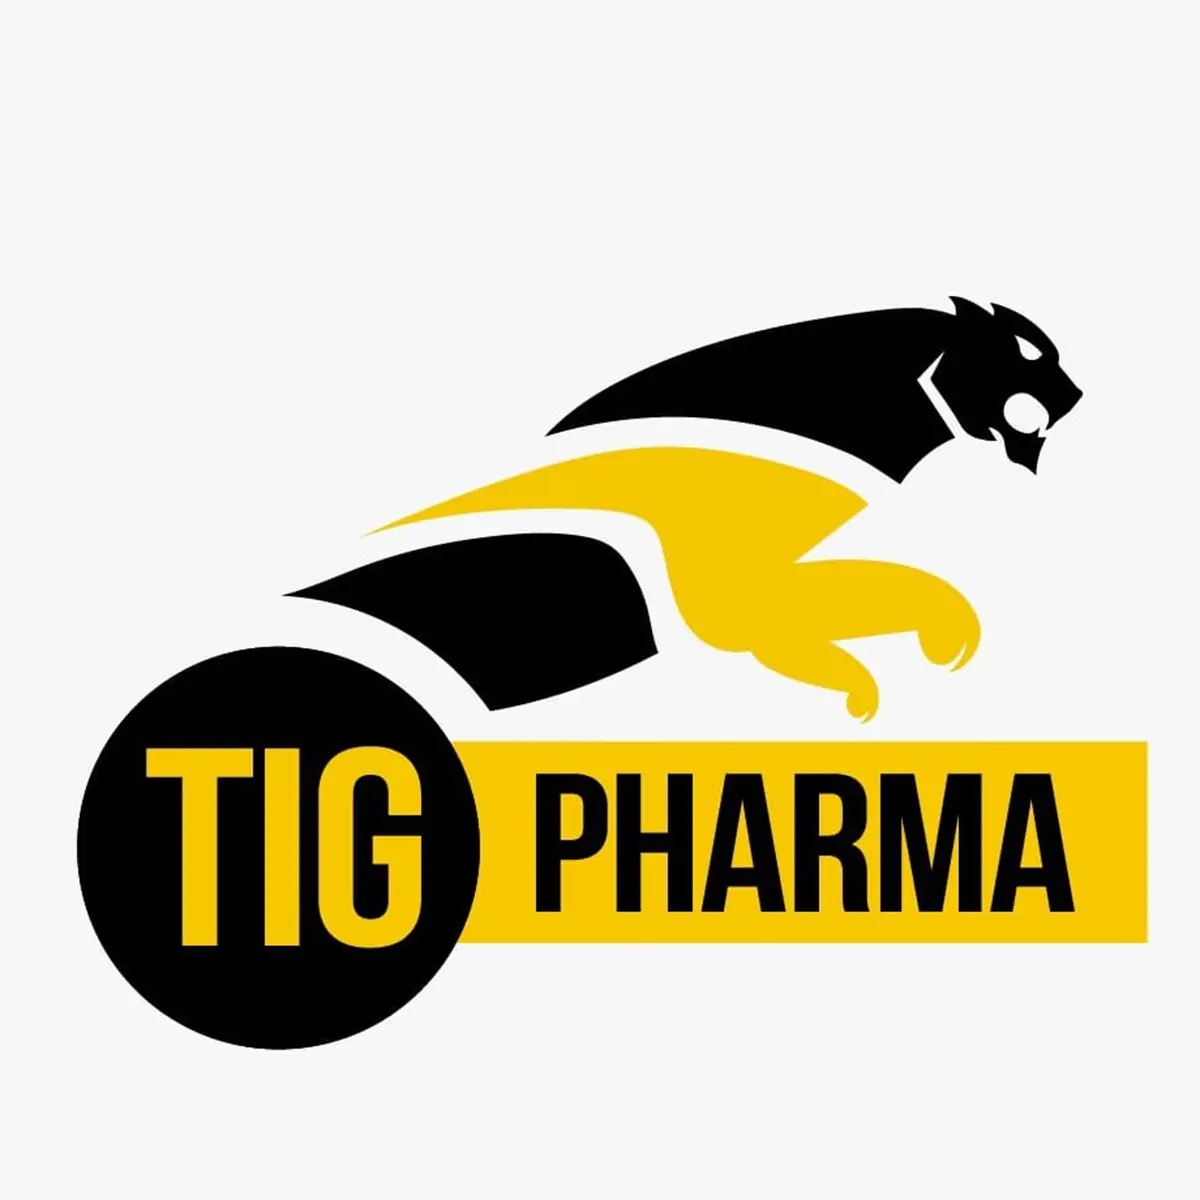 Tig pharma logo